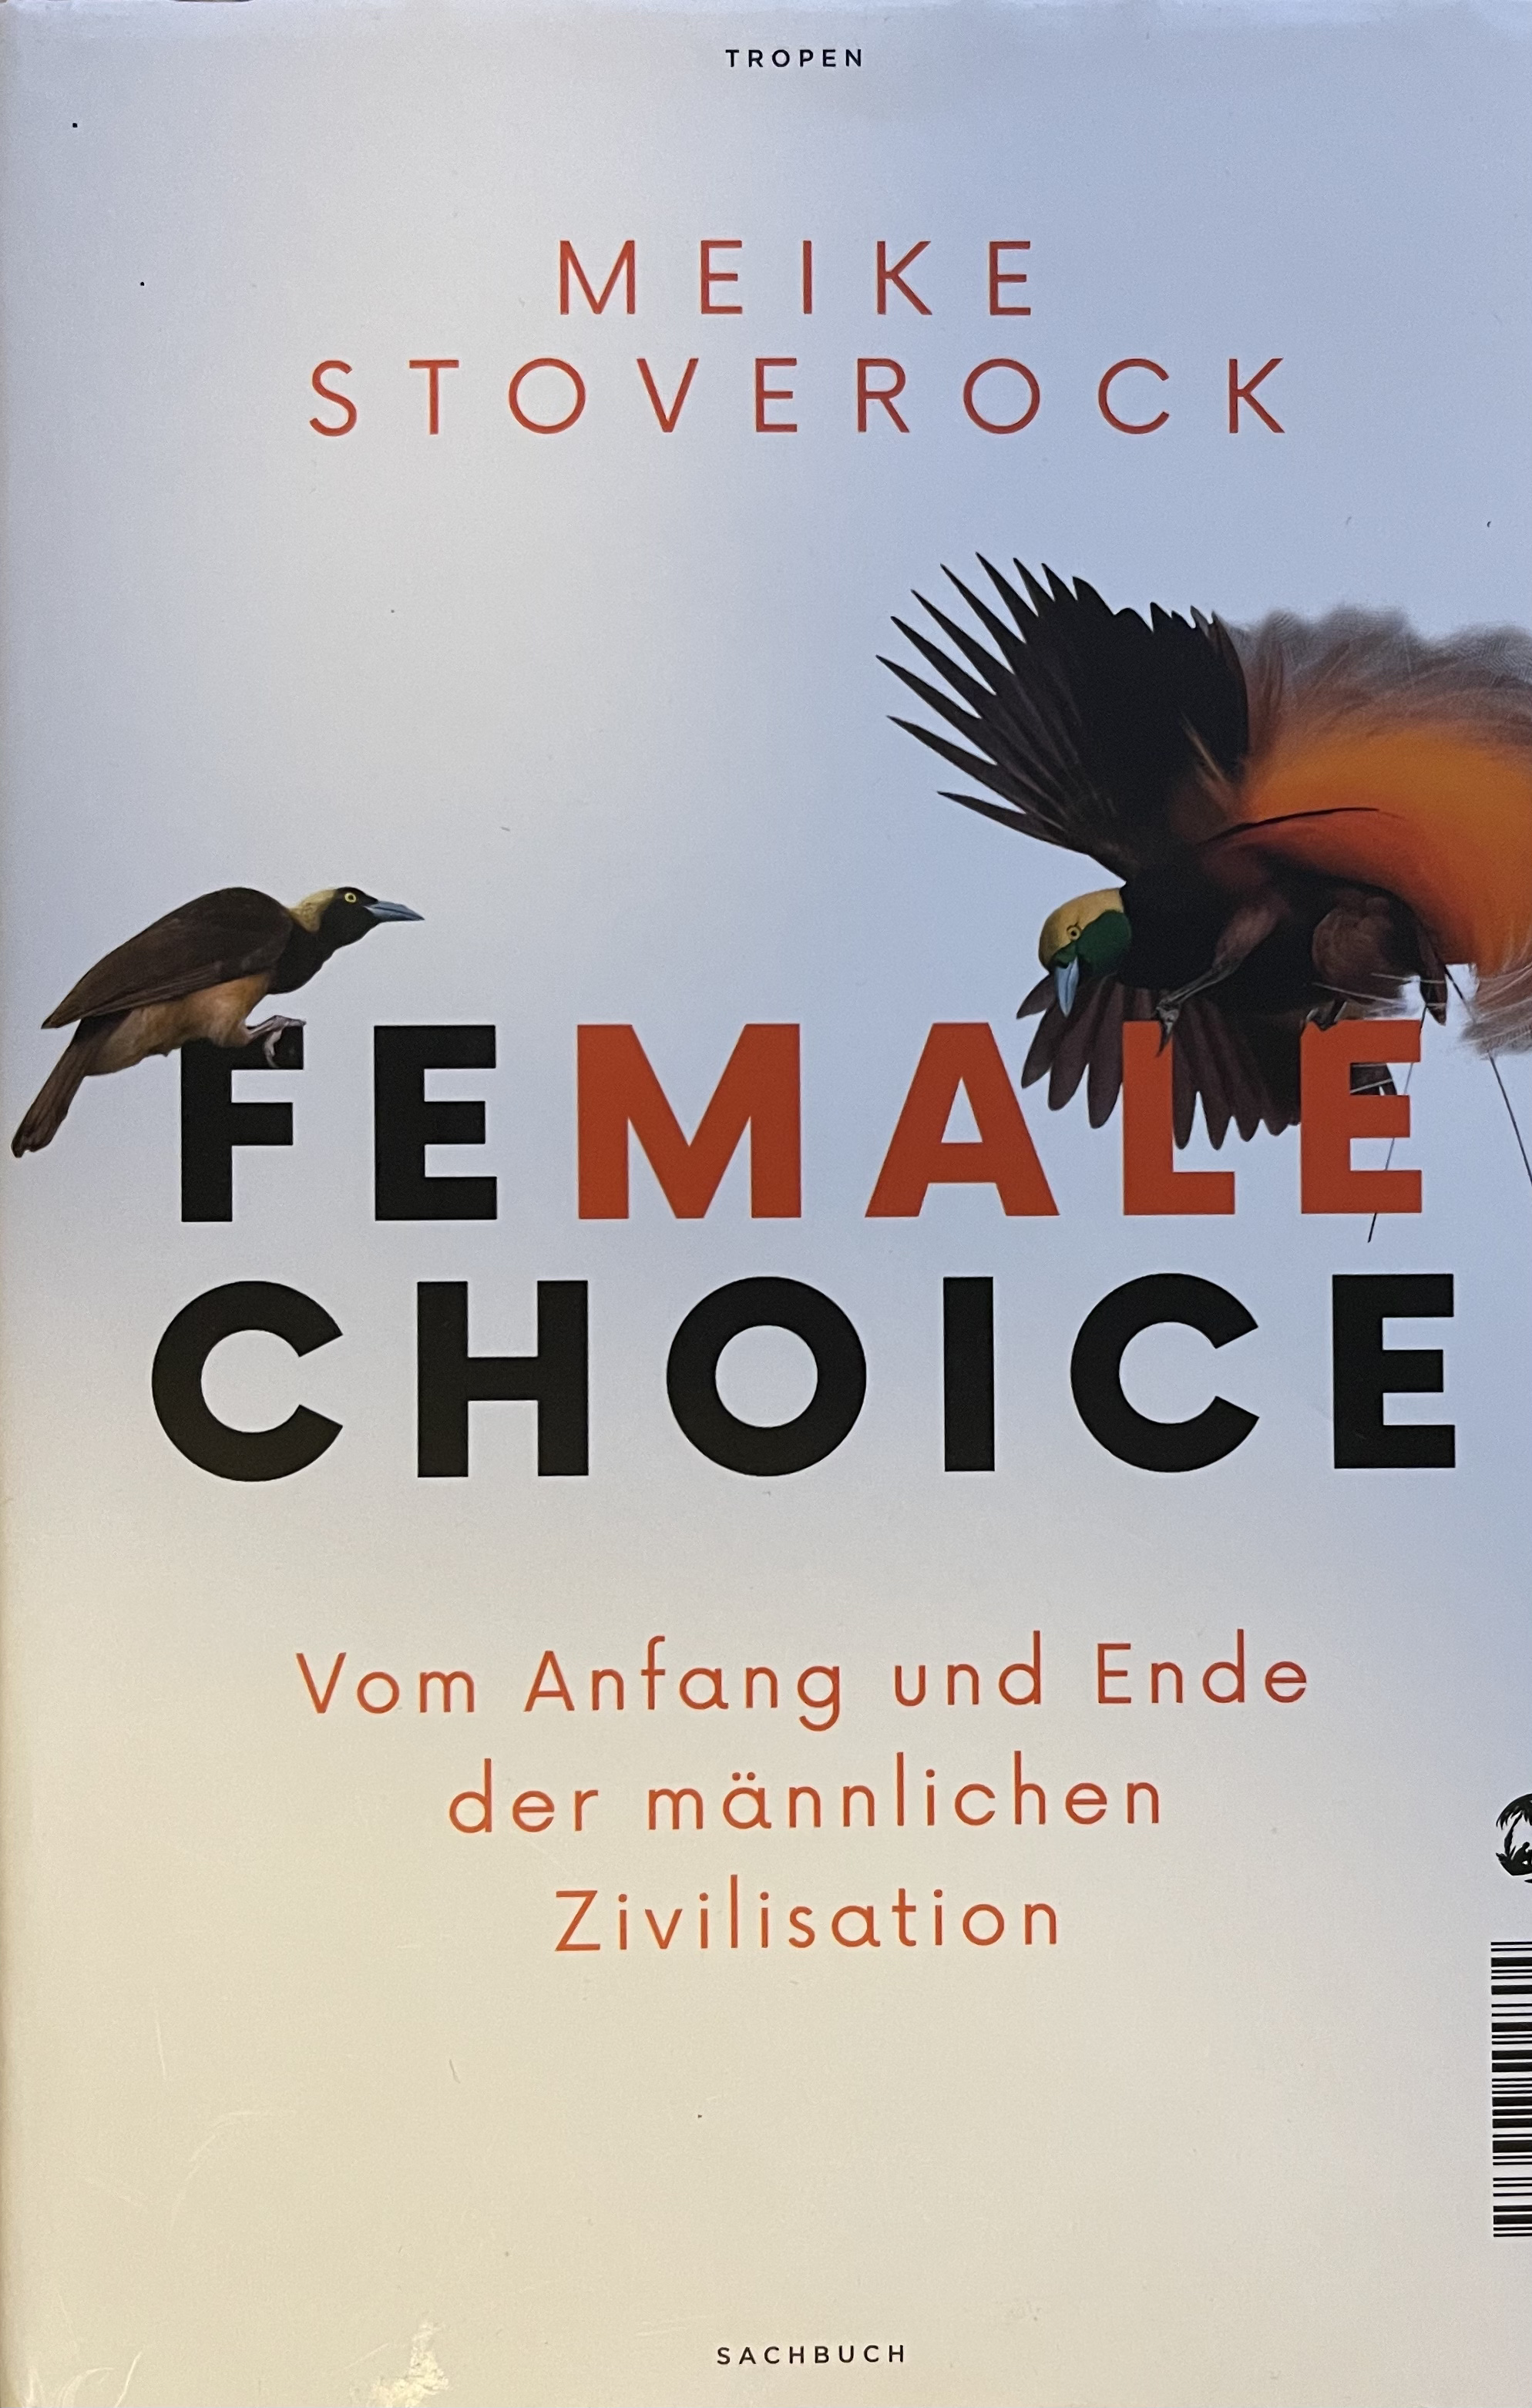 Meike Stoverock: Female Choice (Deutsch language, Tropen)